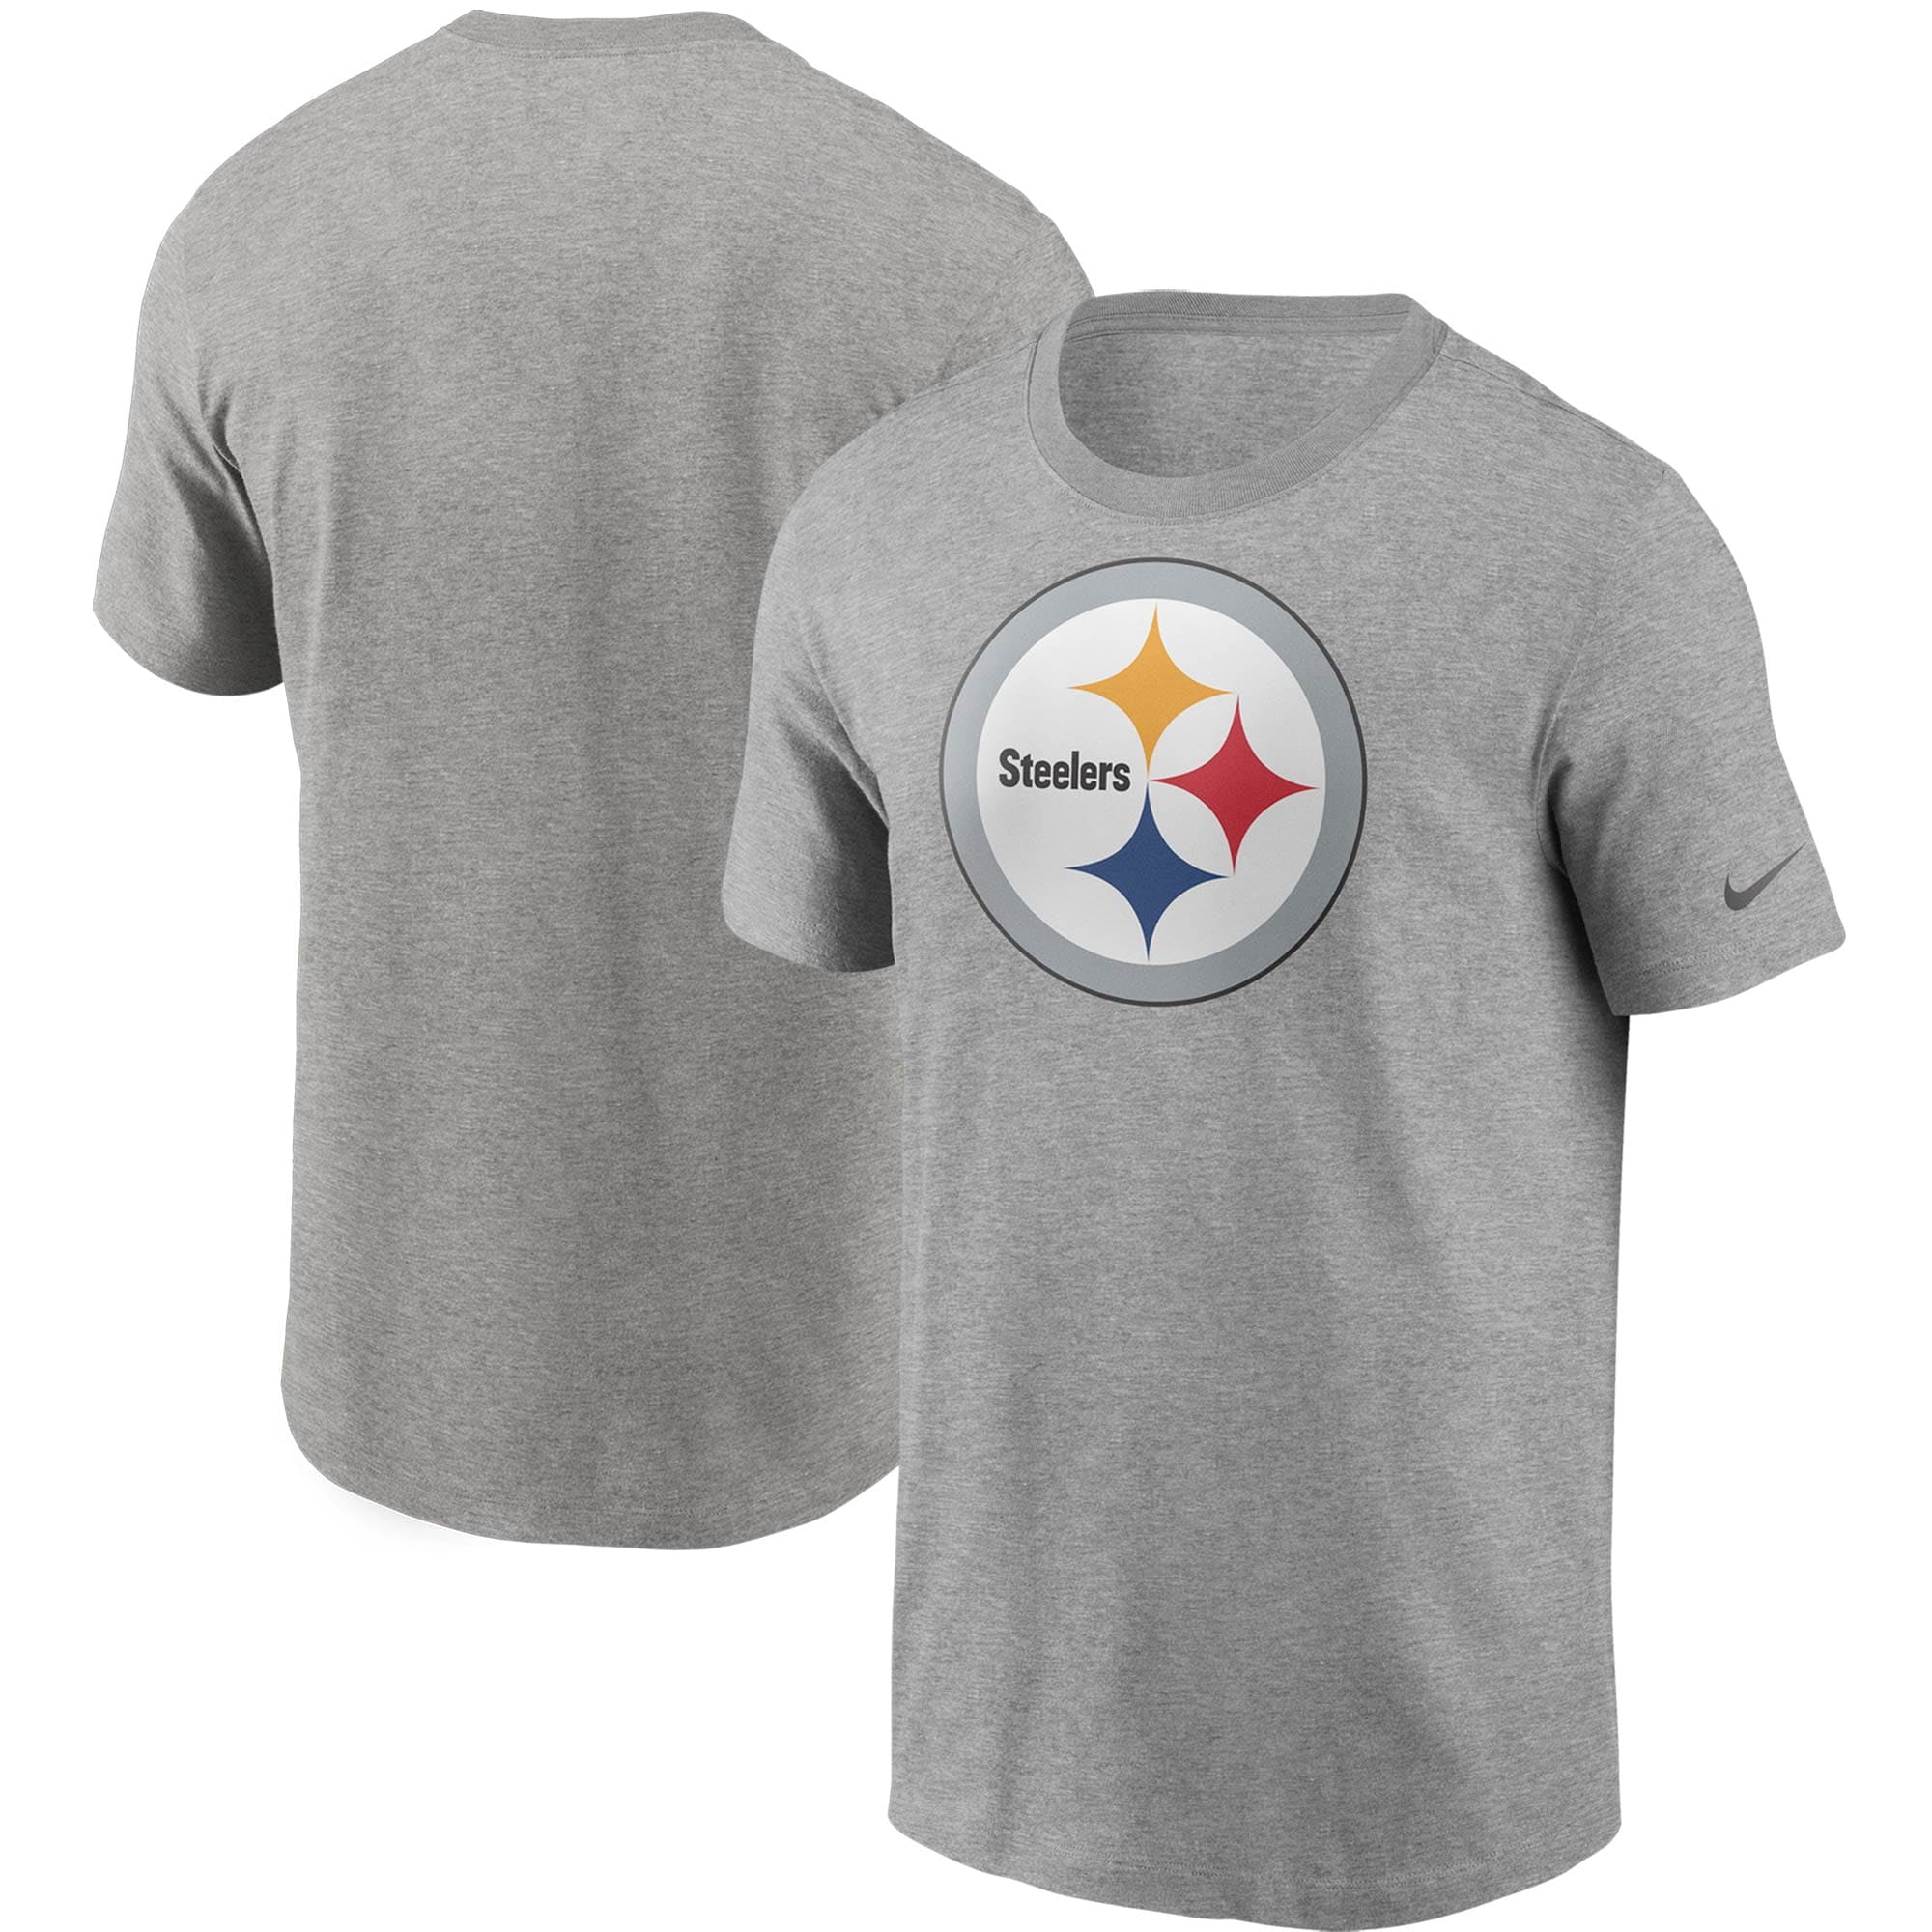 Men's Nike Heathered Gray Pittsburgh Steelers Primary Logo T-Shirt ...